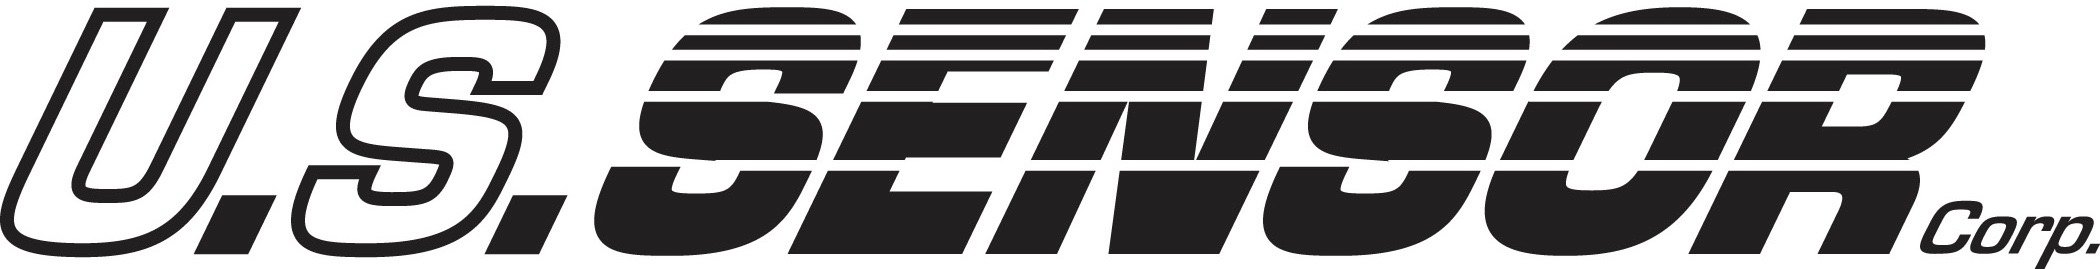 Trademark Logo U.S. SENSOR CORP.